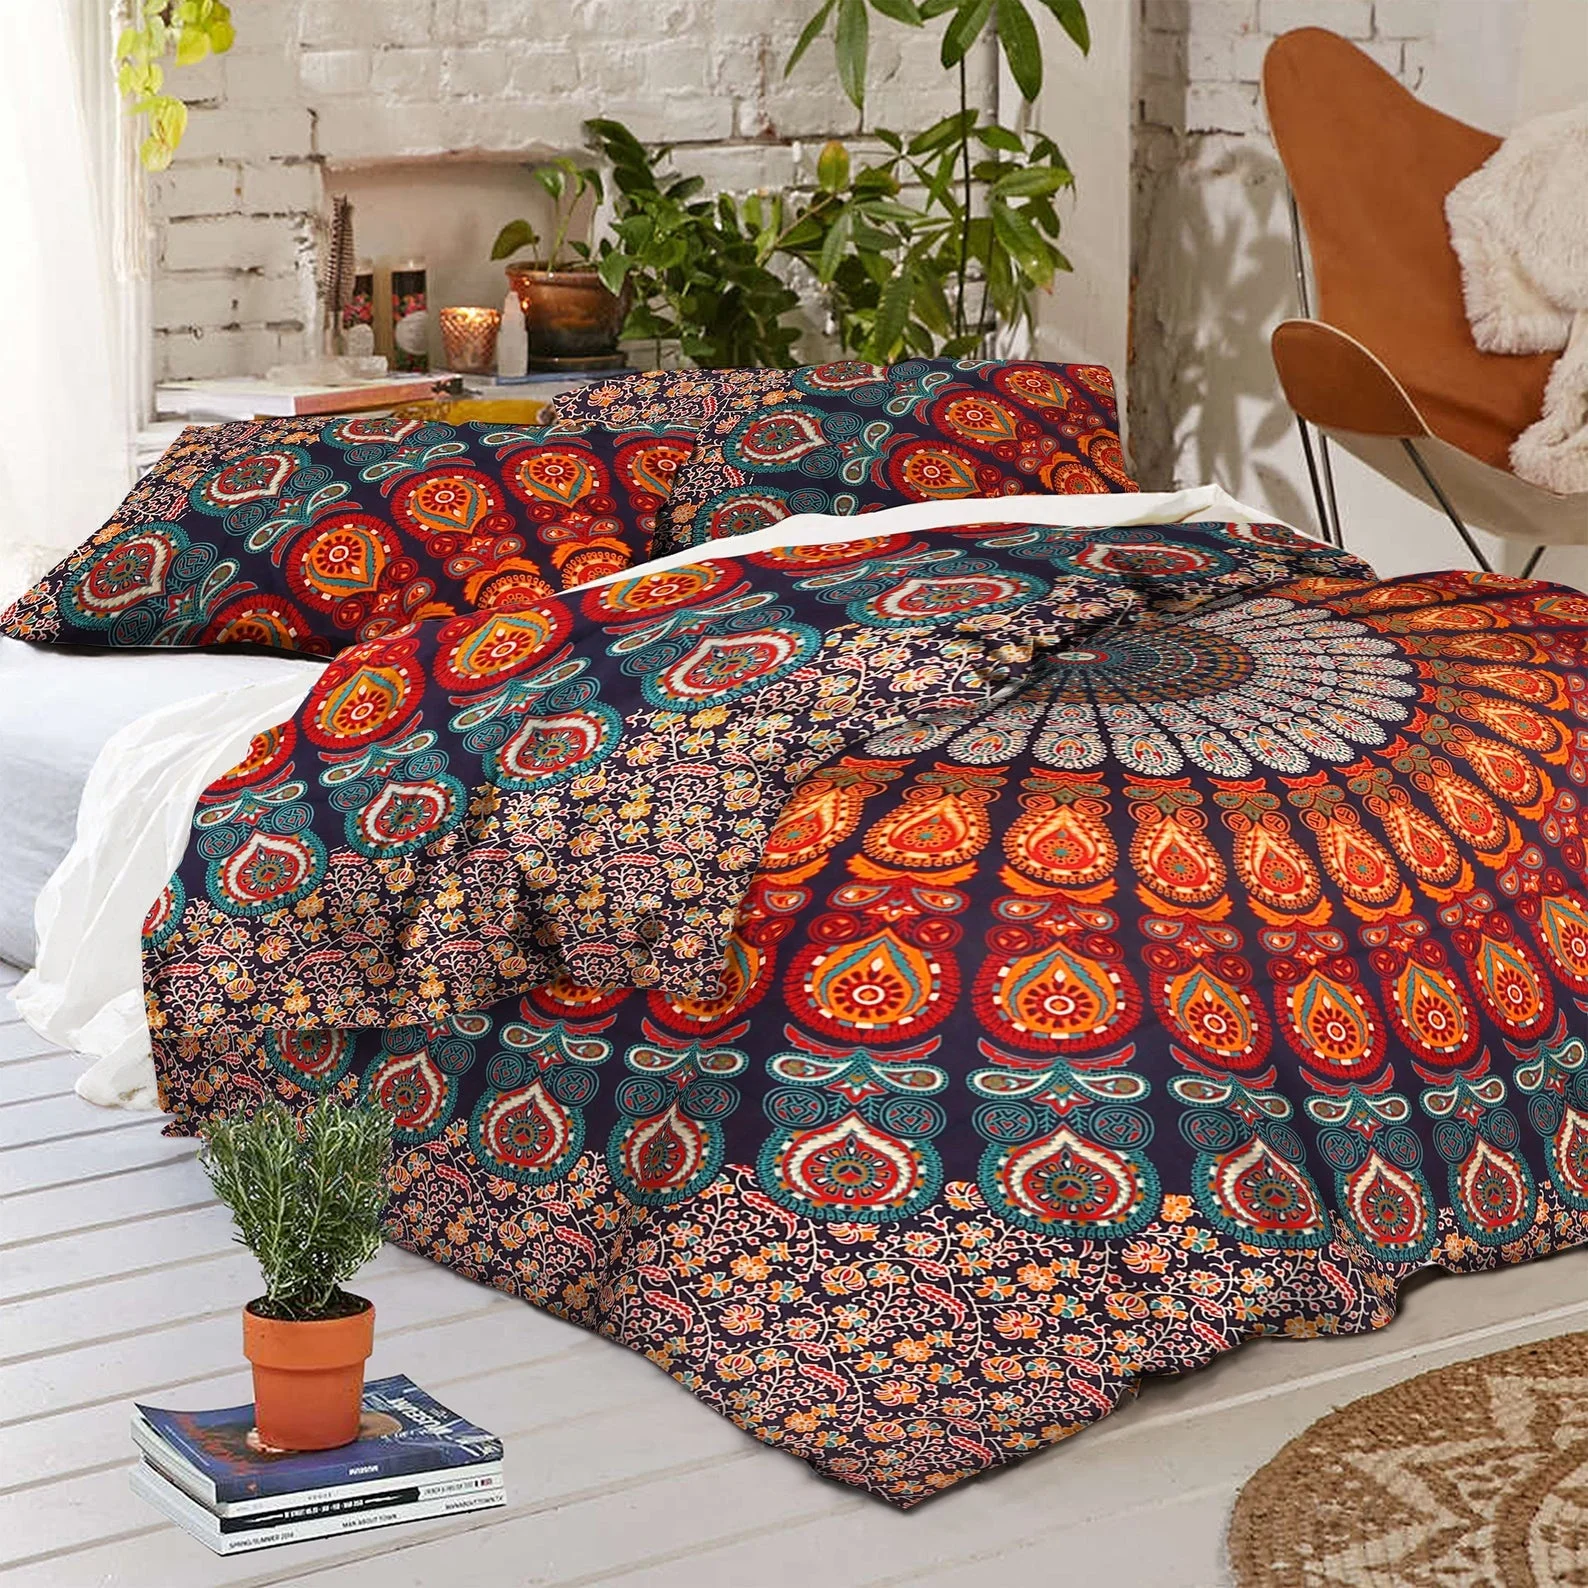 King Size Mandala Bedding Tapestry Hippie Bohemian Bedspread Bed Cover Throw Bohemian Mandala Comforter Set (10000005172862)